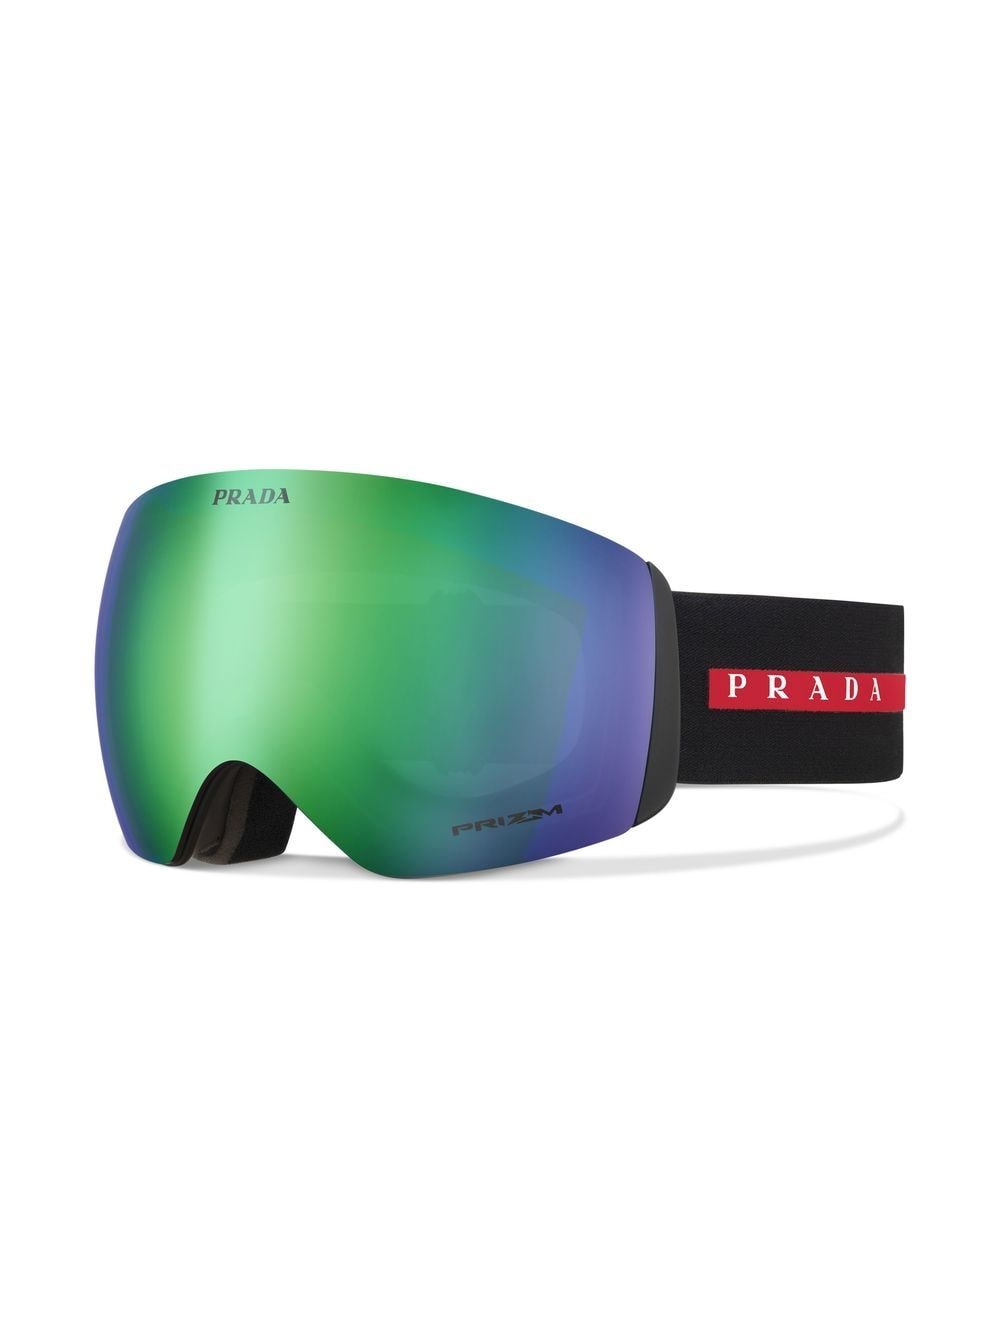 Prada Eyewear x Oakley Linea Rossa Ski Goggles - Green